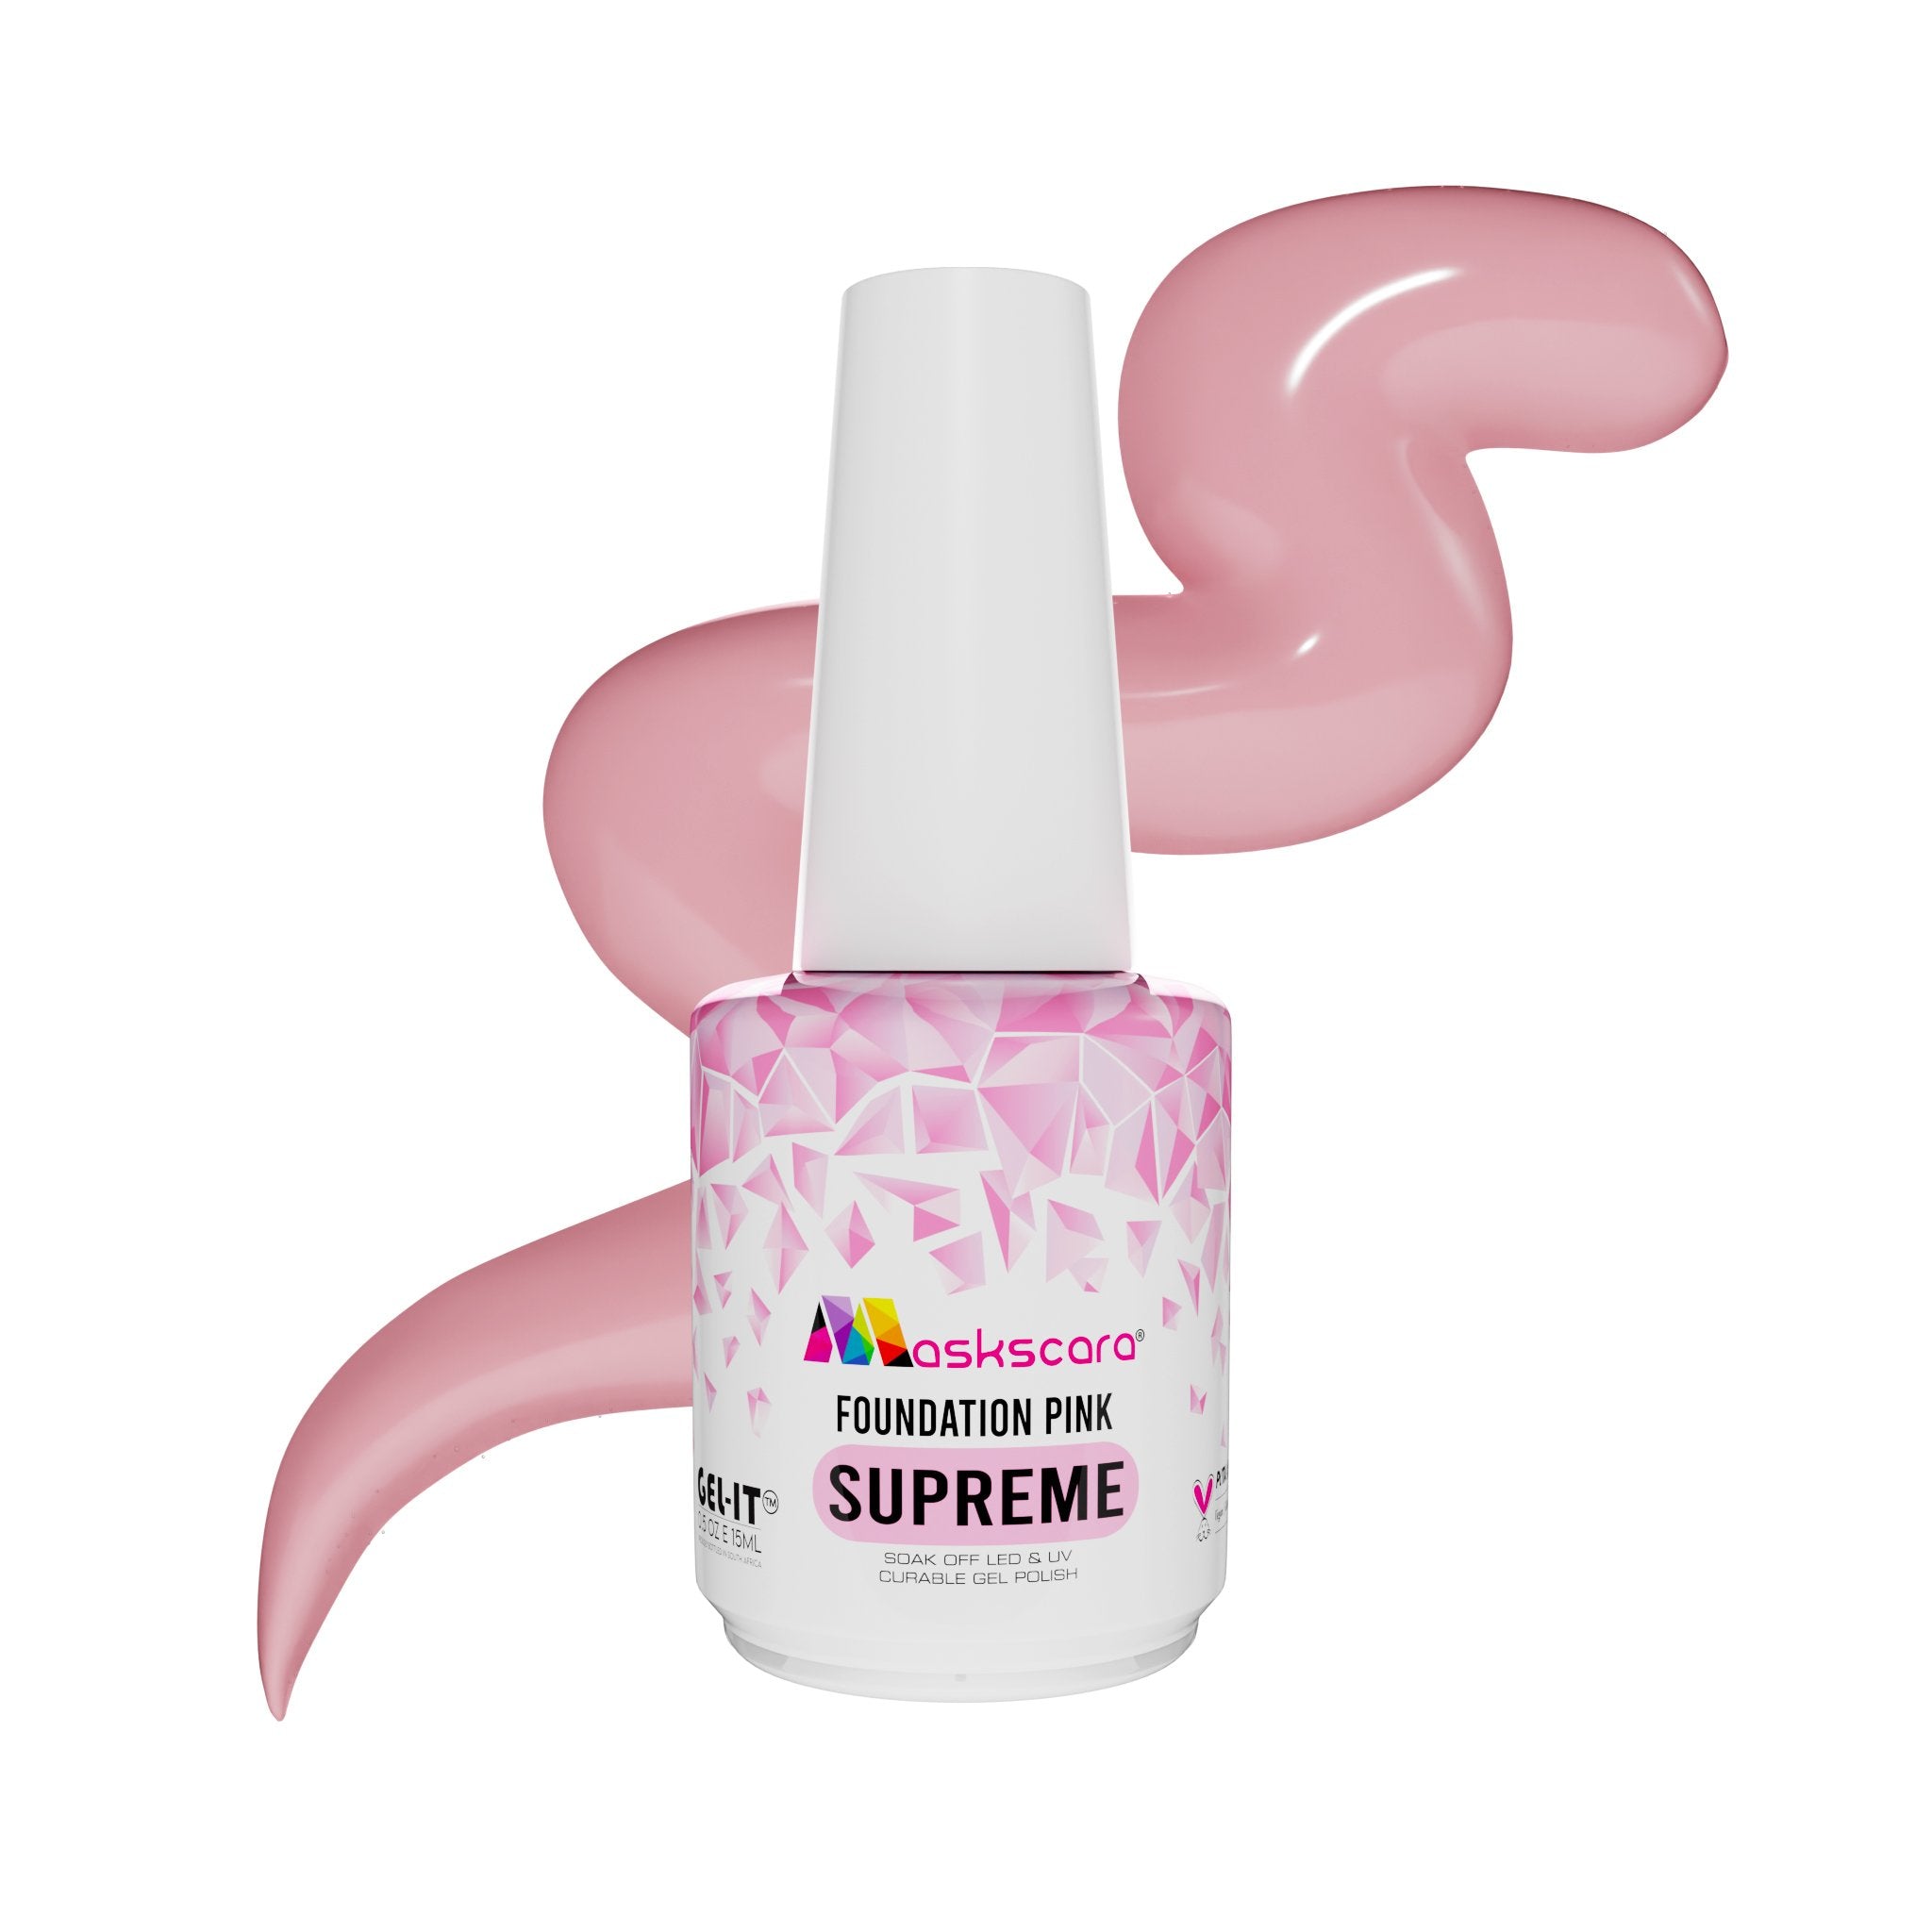 <img scr = “Maskscara Supreme Nail Foundation - Pink.jpg” alt = “Pink Supreme Foundation Gel by the brand Maskscara”>